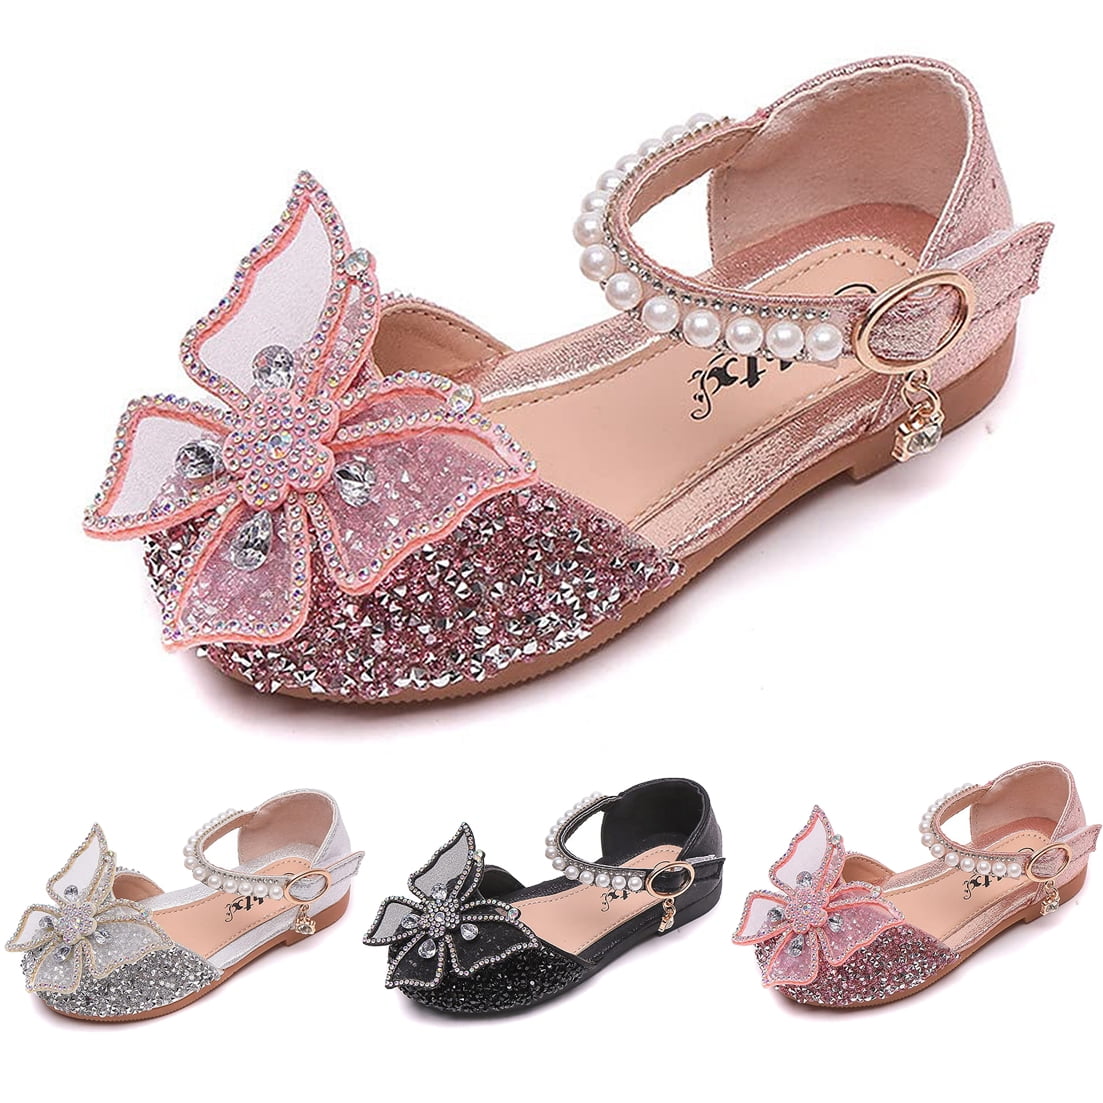 Toddler Infant Kid Baby Girl Bling Sequins Dance Princess Shoes Sandals 12M-7T G 